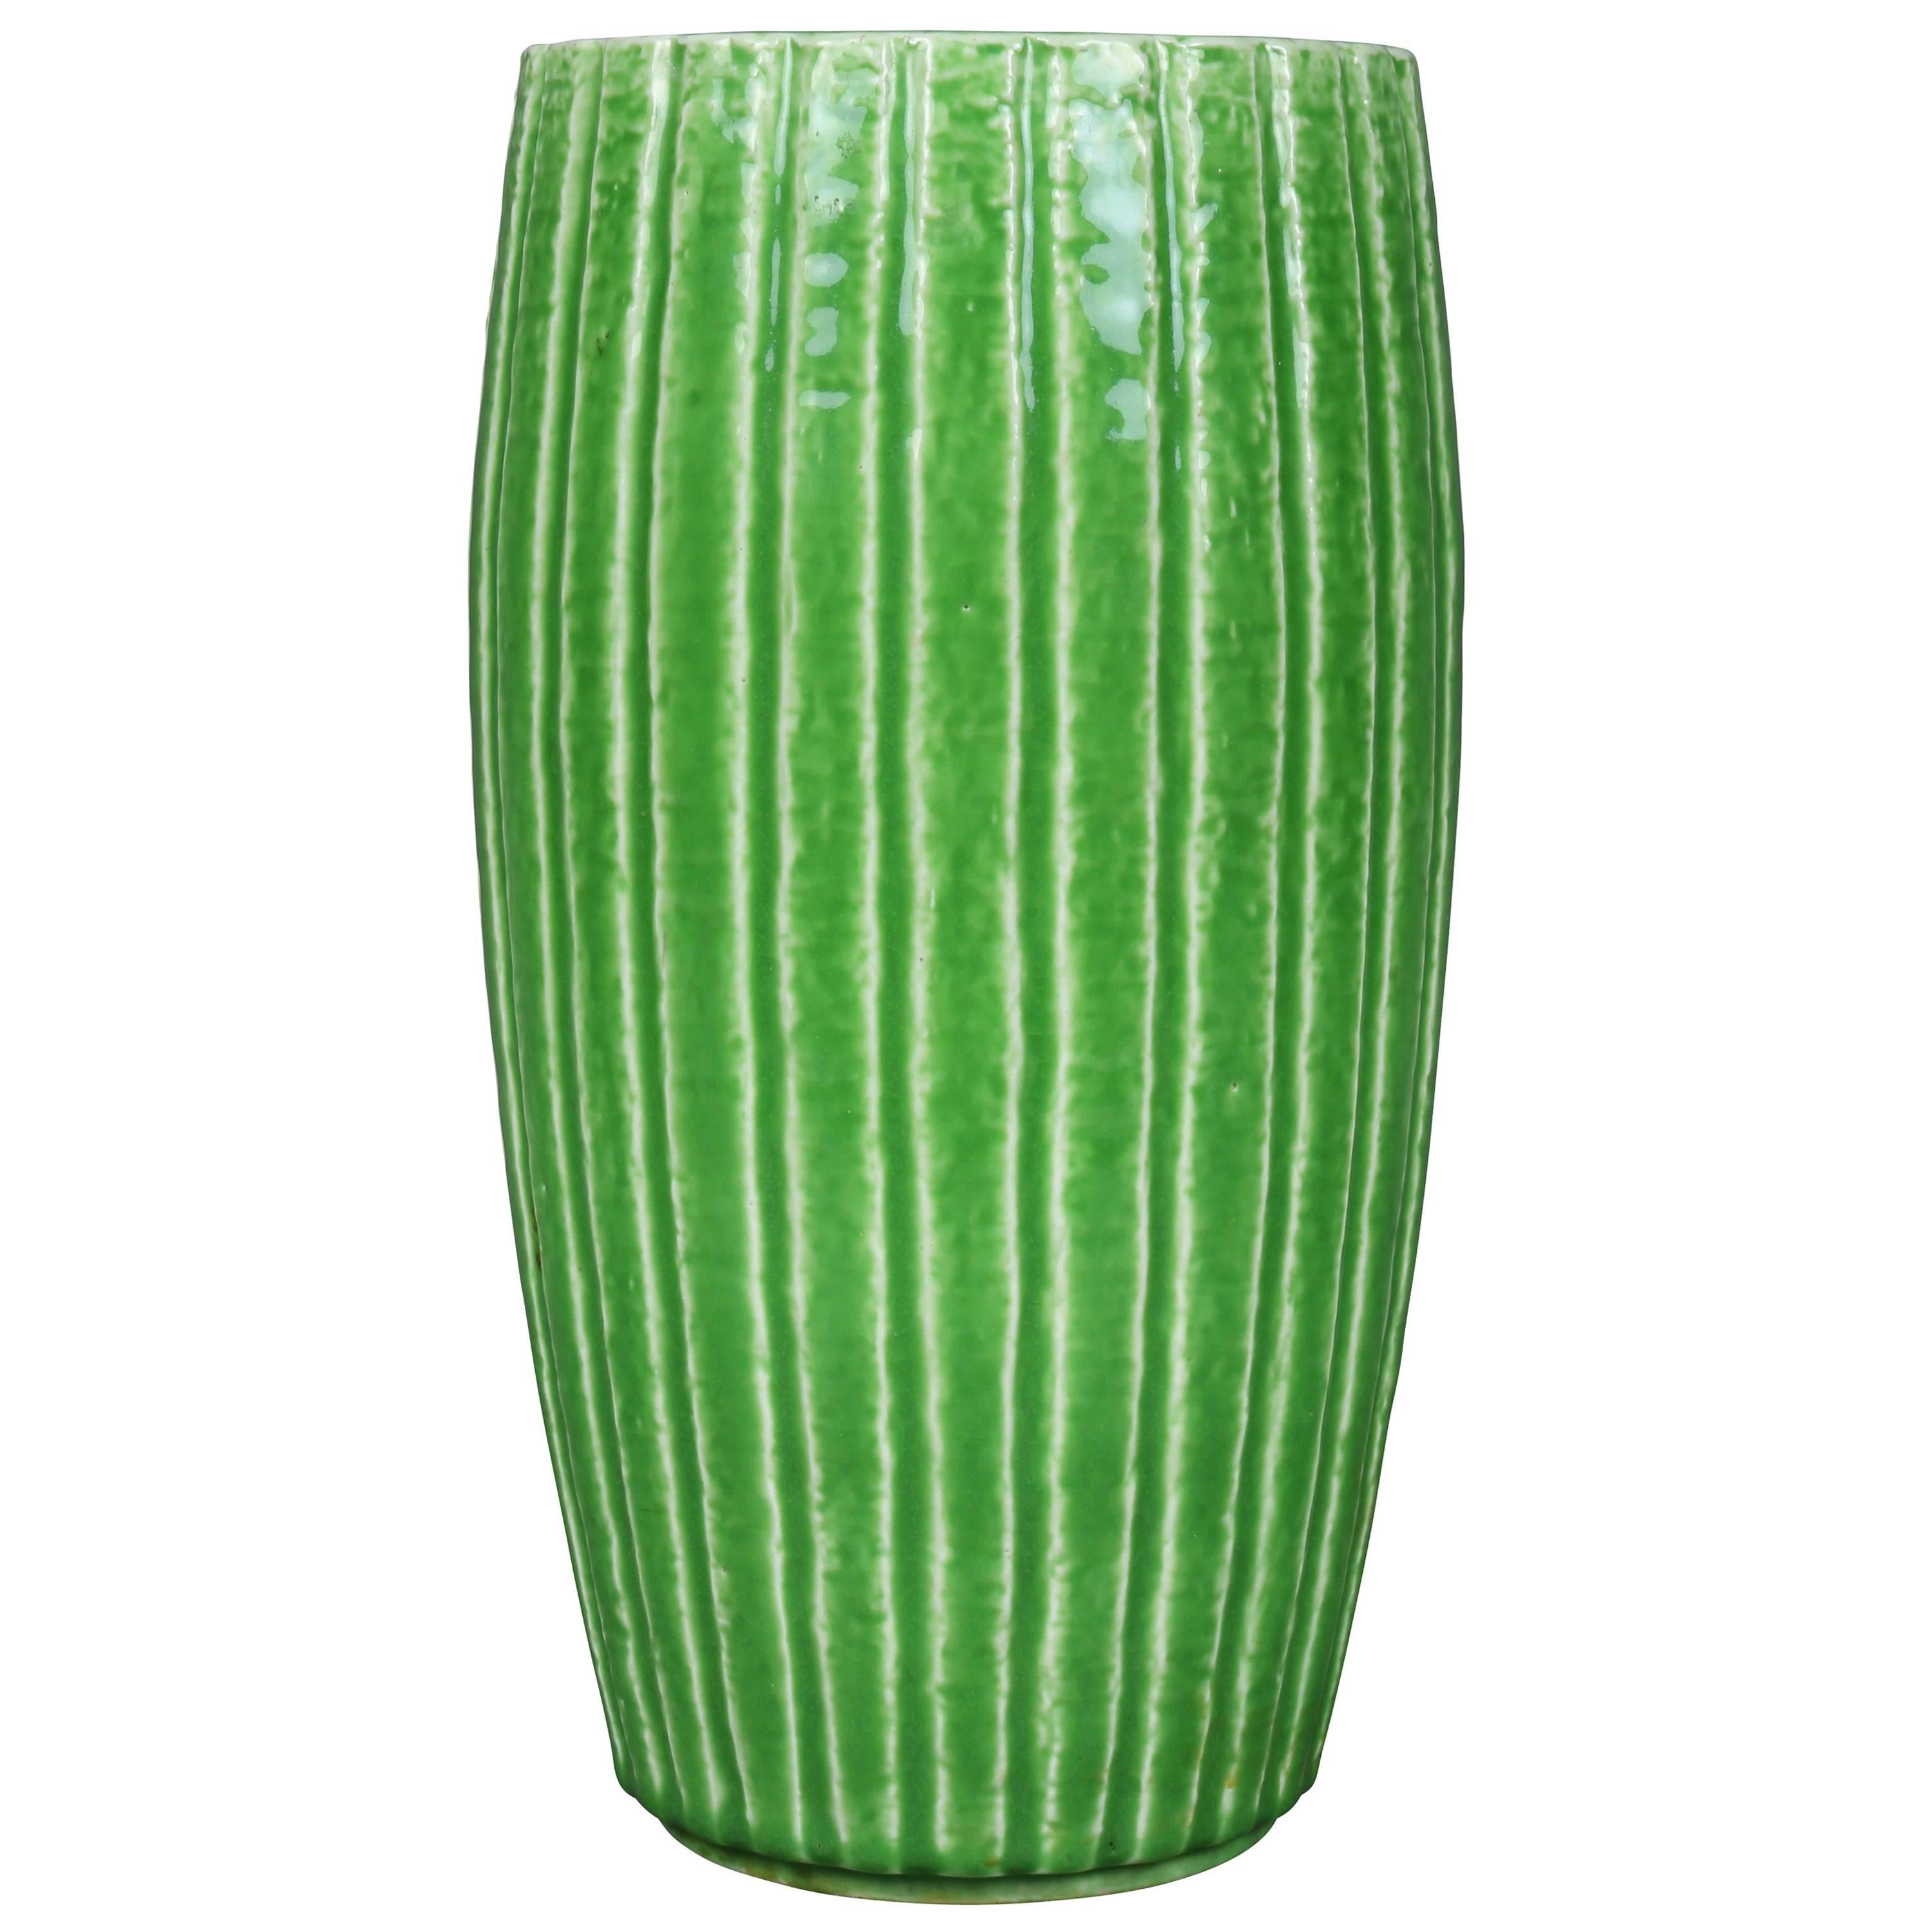 Gunner Nylund Chamotte Pottery Vase